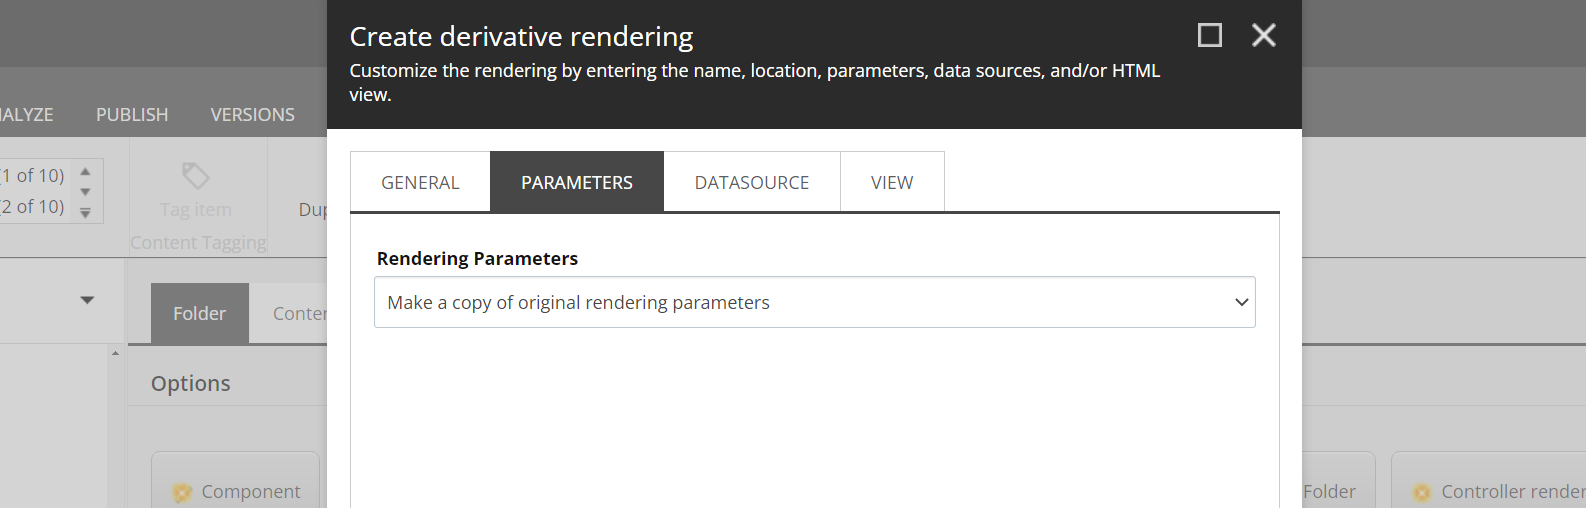 Create a derivative rendering in Sitecore parameters step.